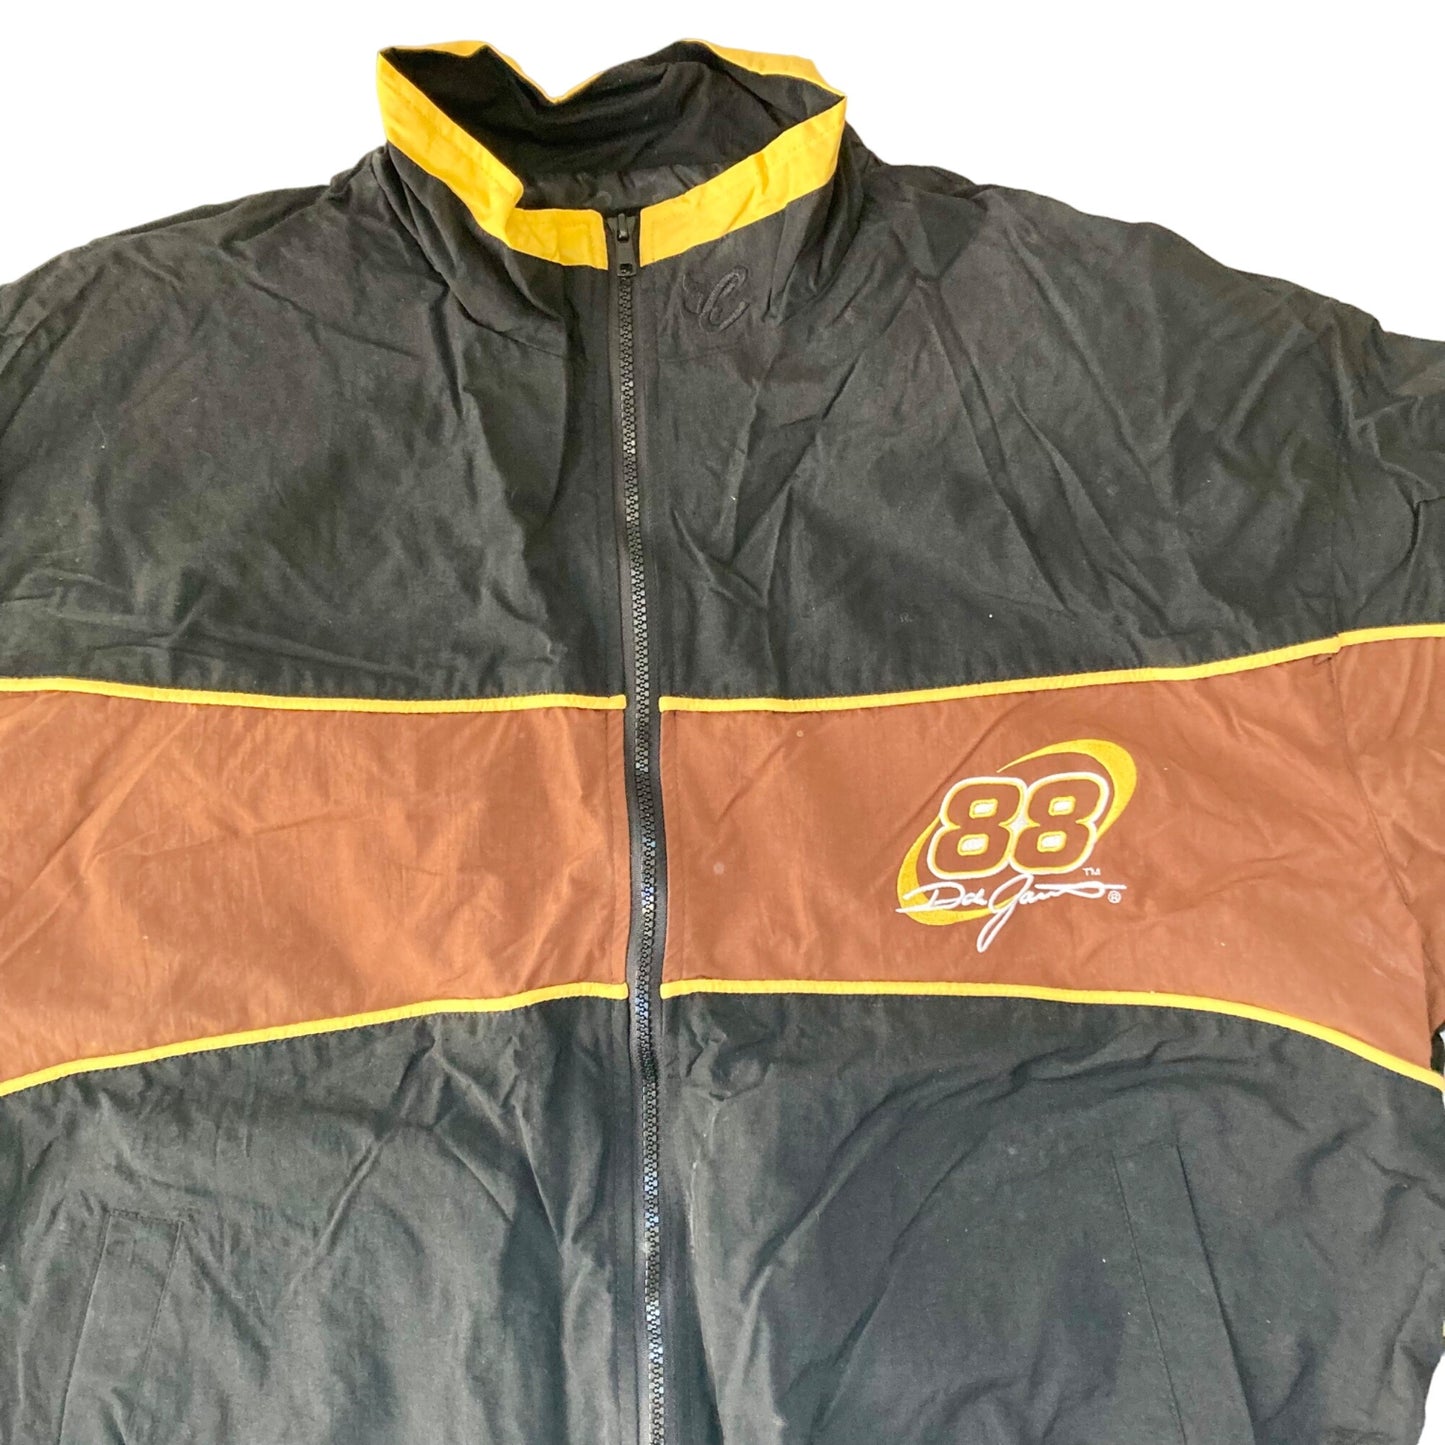 Vintage Dale Jarrett 88 UPS NASCAR Windbreaker Jacket Size L Chase Authentic NOS